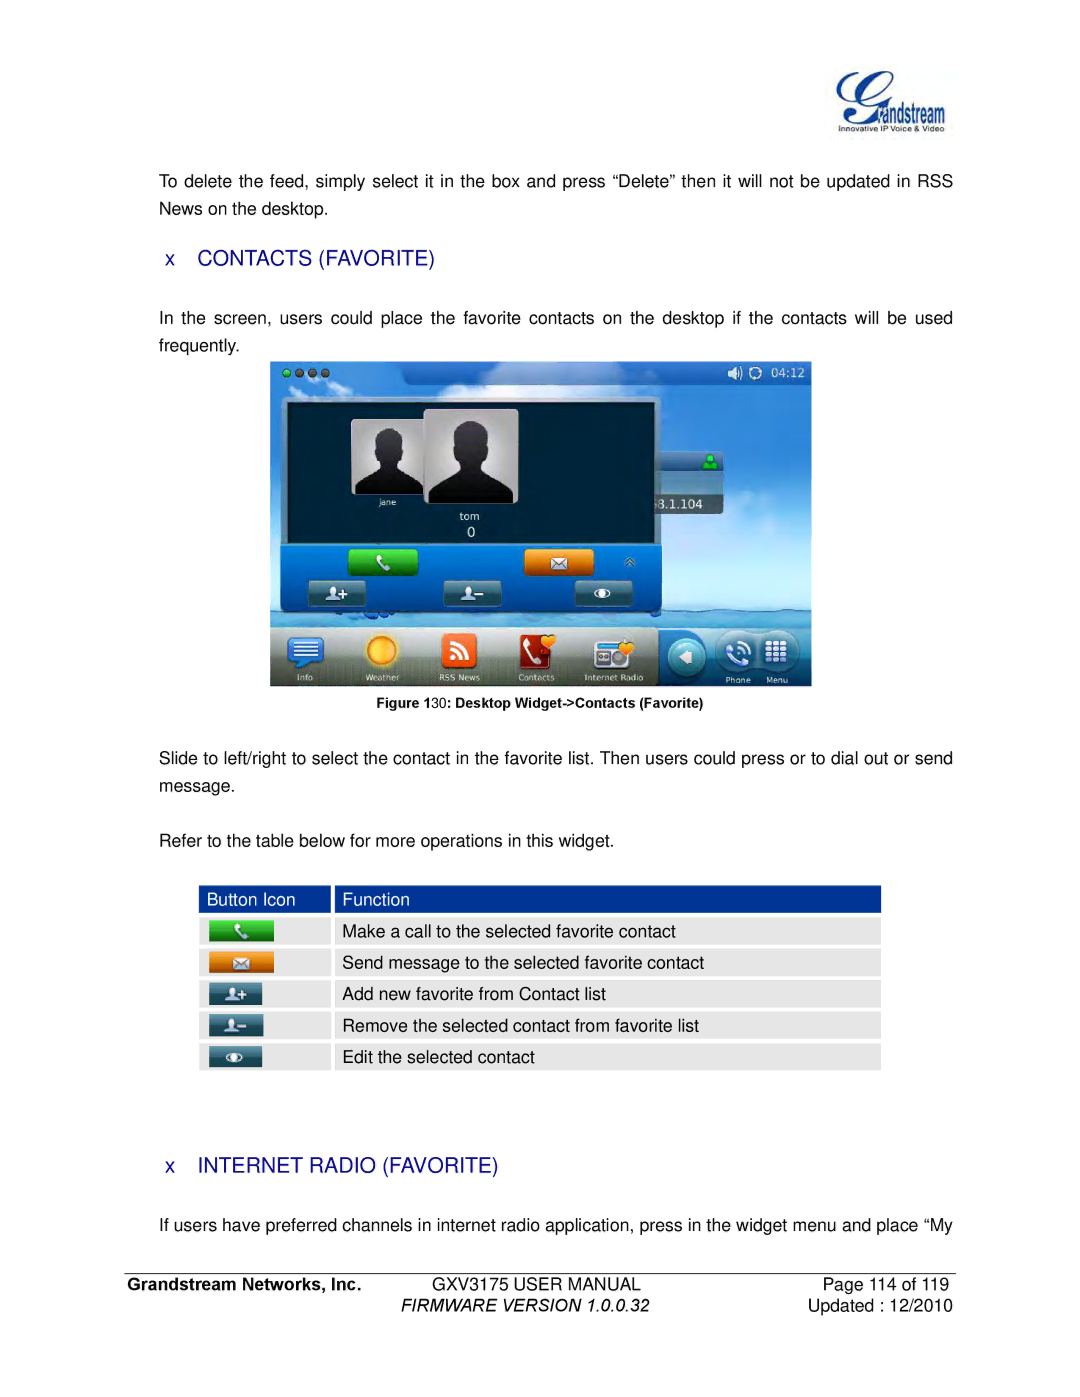 Grandstream Networks GXV3175 manual ∙ Contacts Favorite, ∙ Internet Radio Favorite 